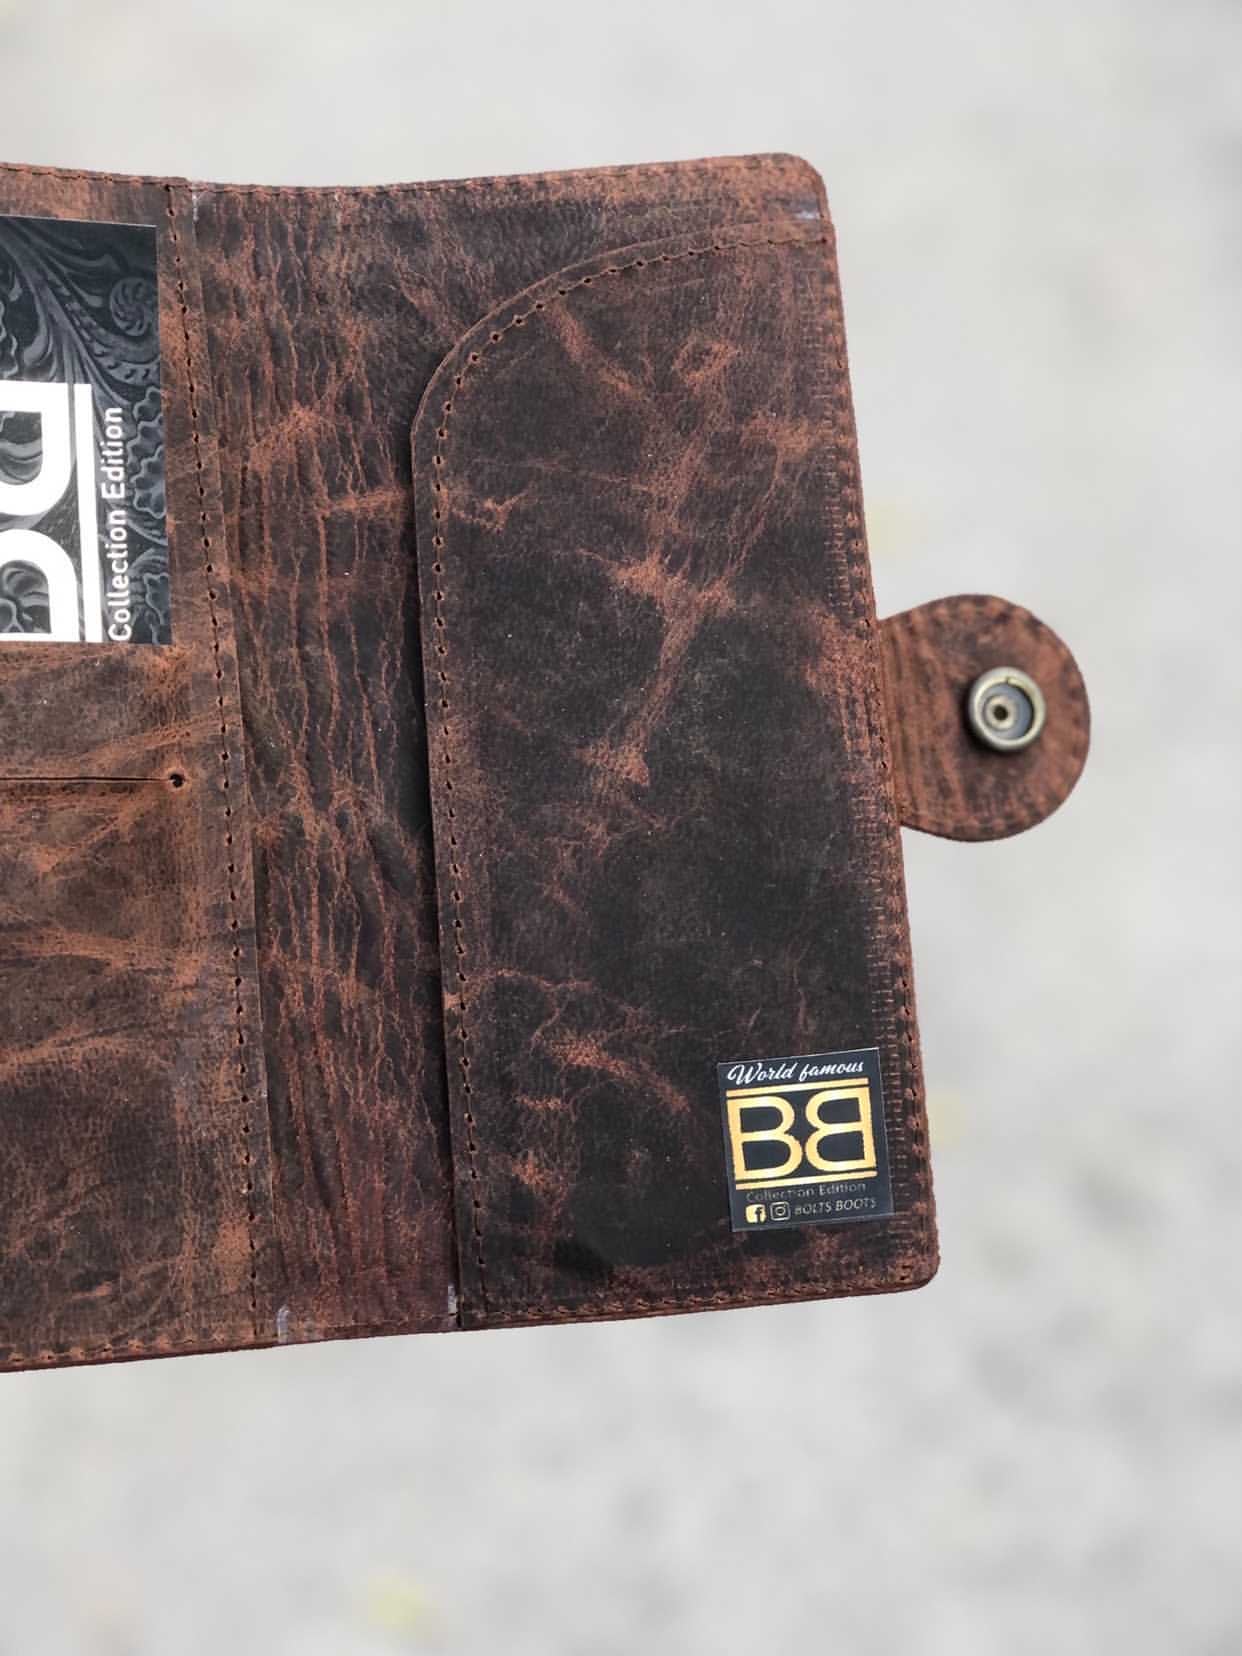 Mahogany California handtooled wallet by Boltsbootsbrand